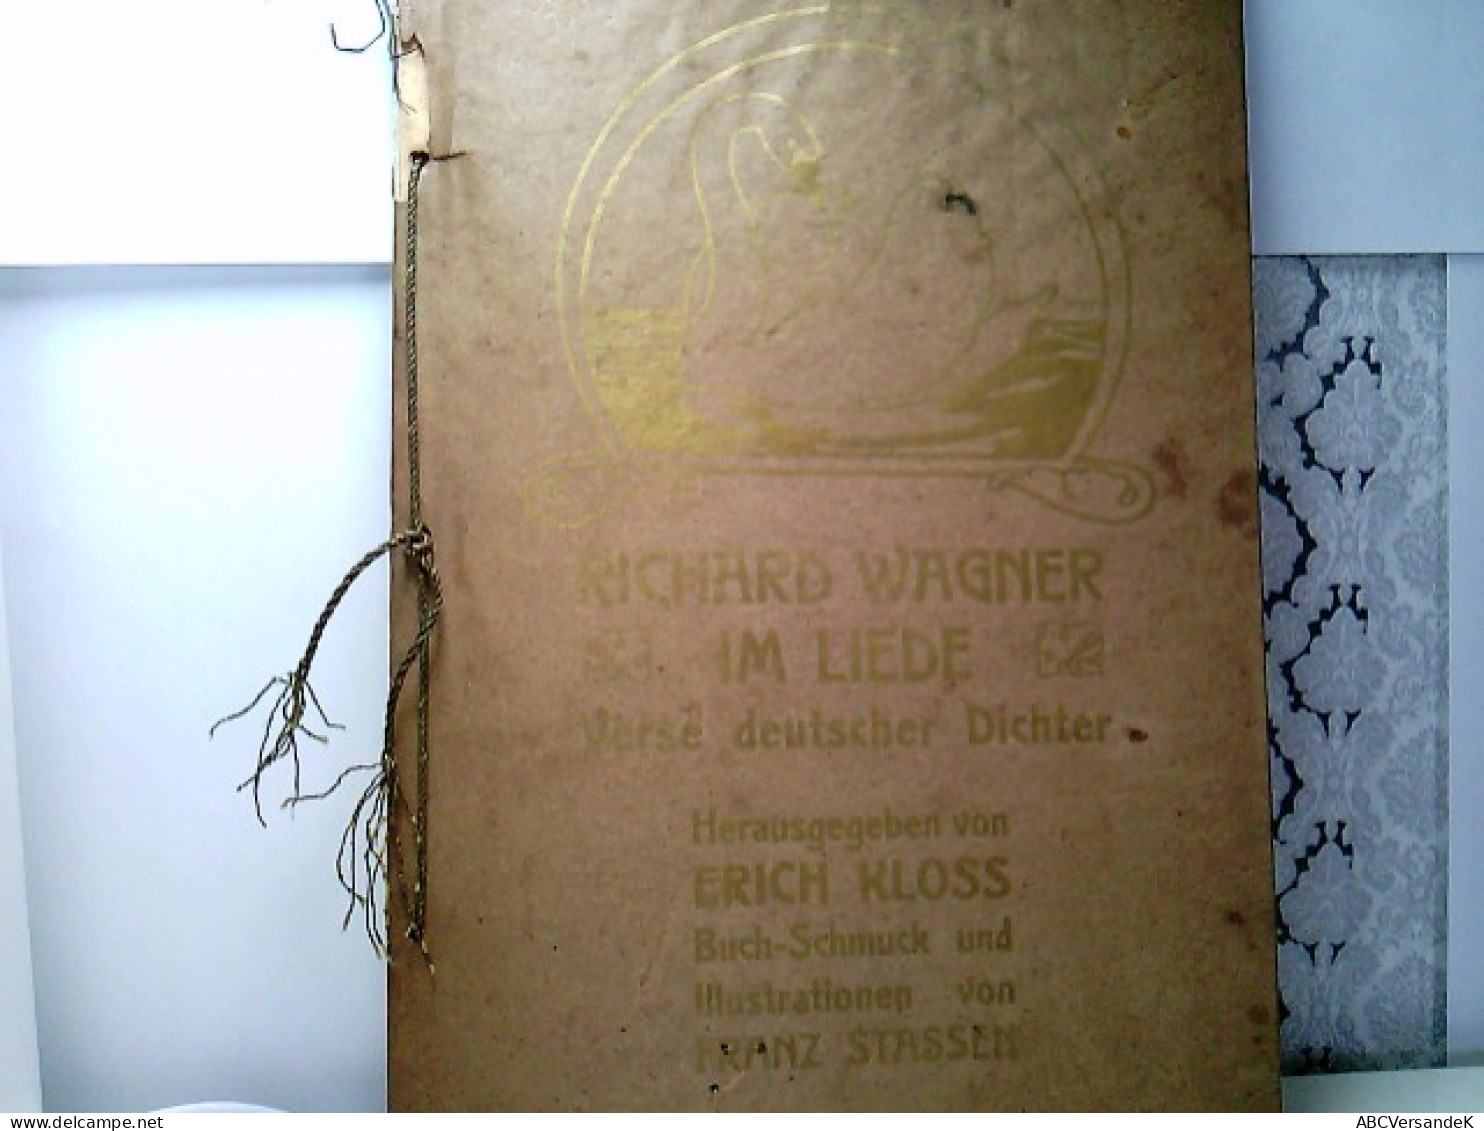 Richard Wagner Im Liede. Verse Deutscher Dichter. - Auteurs All.